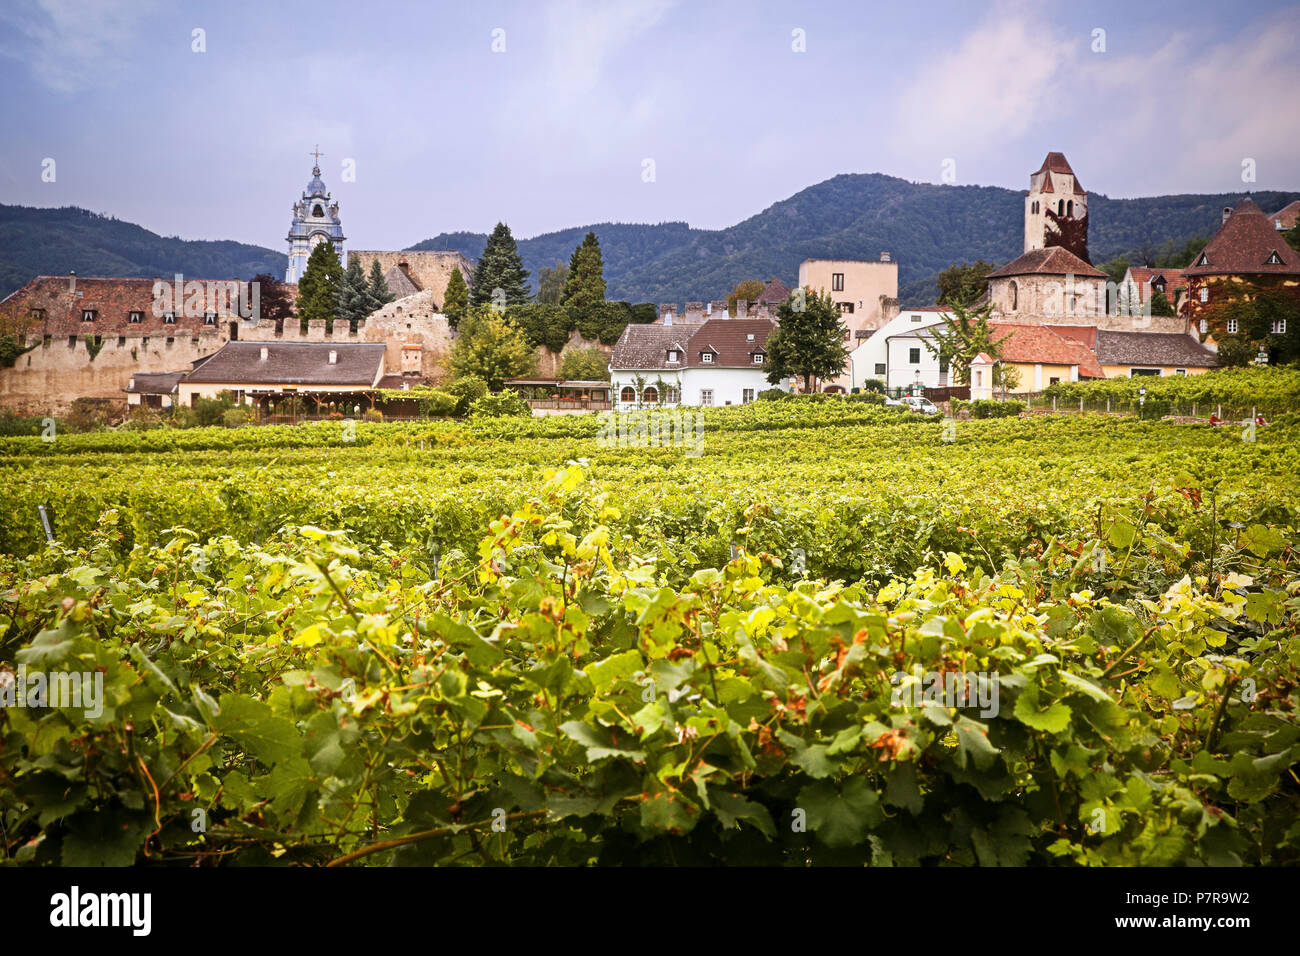 The wine producing area at Durnstein, Austria. Stock Photo